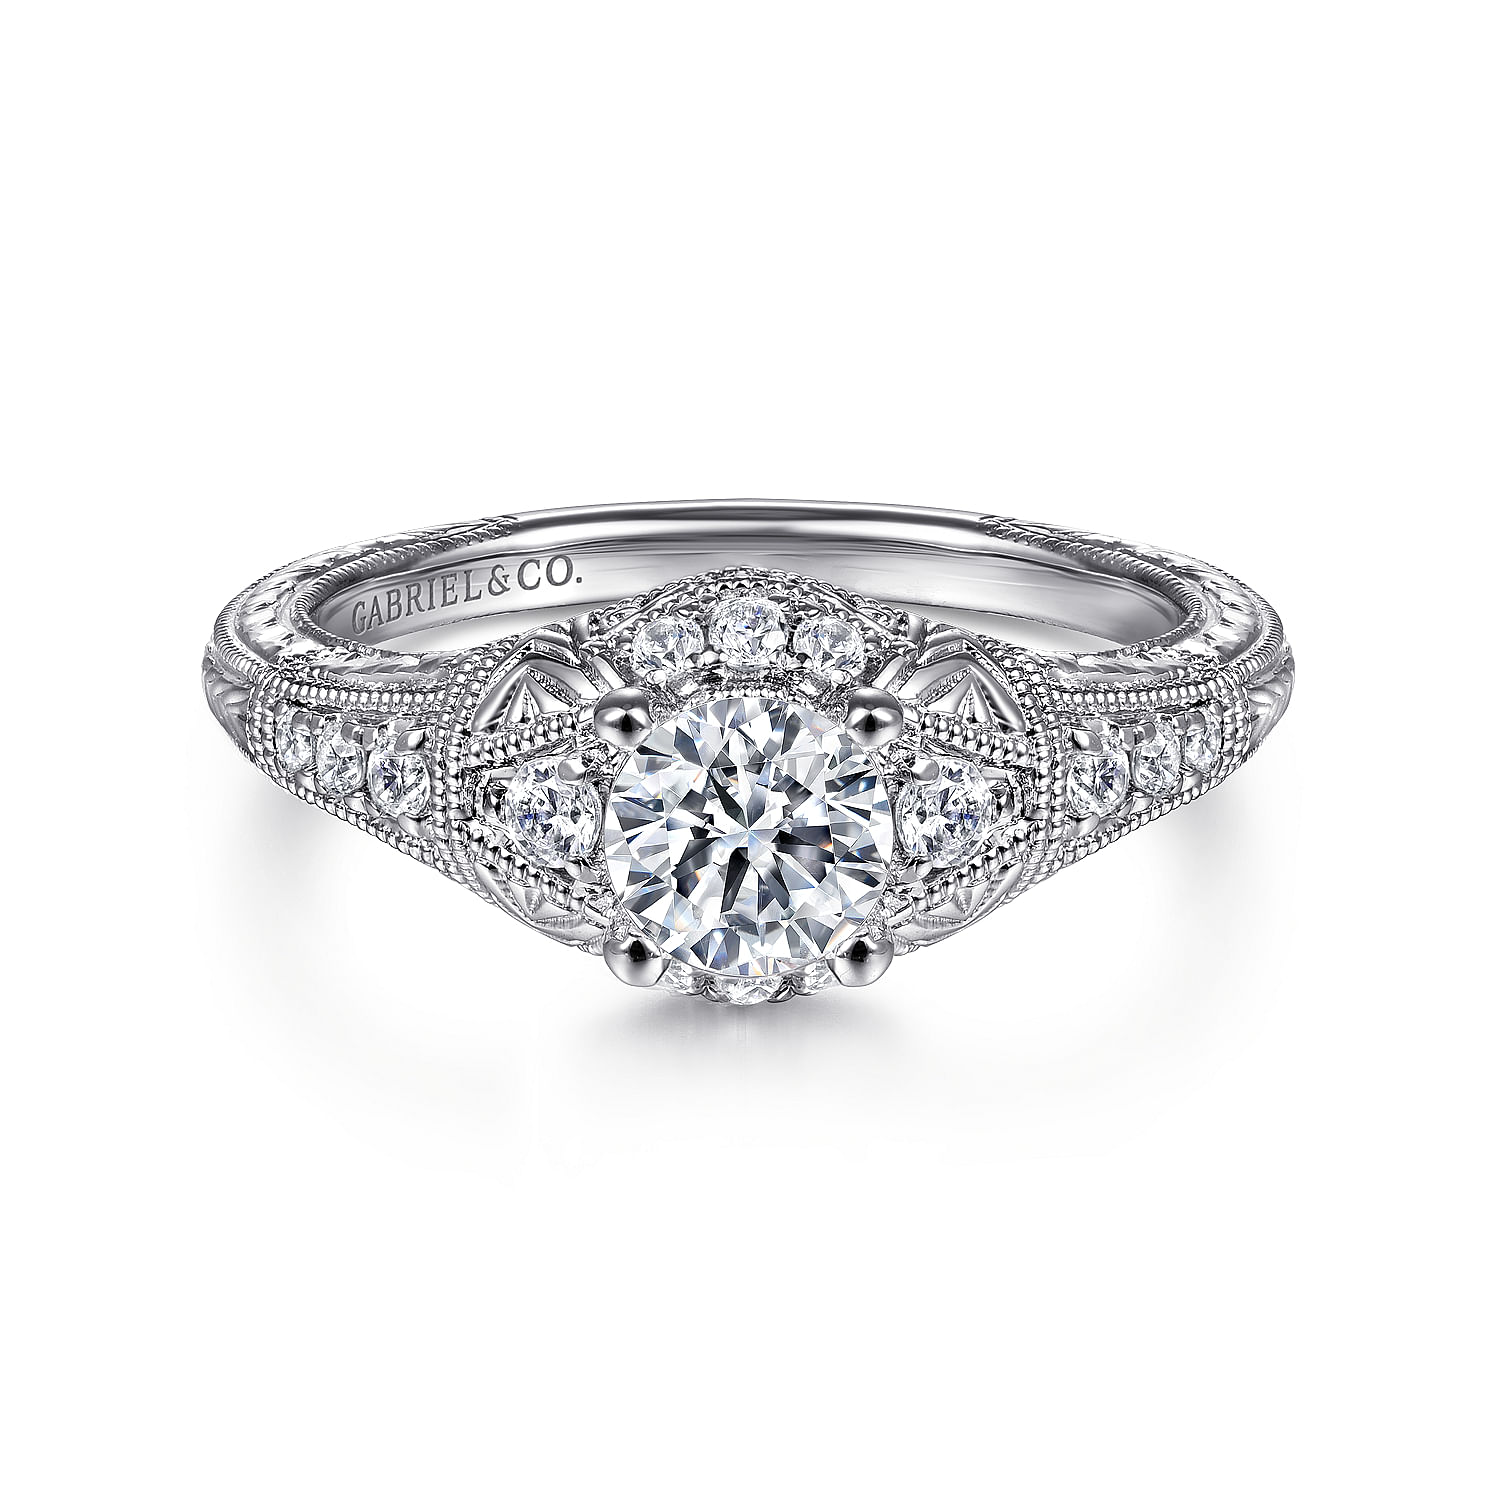 Granada---Vintage-Inspired-14K-White-Gold-Round-Diamond-Engagement-Ring1